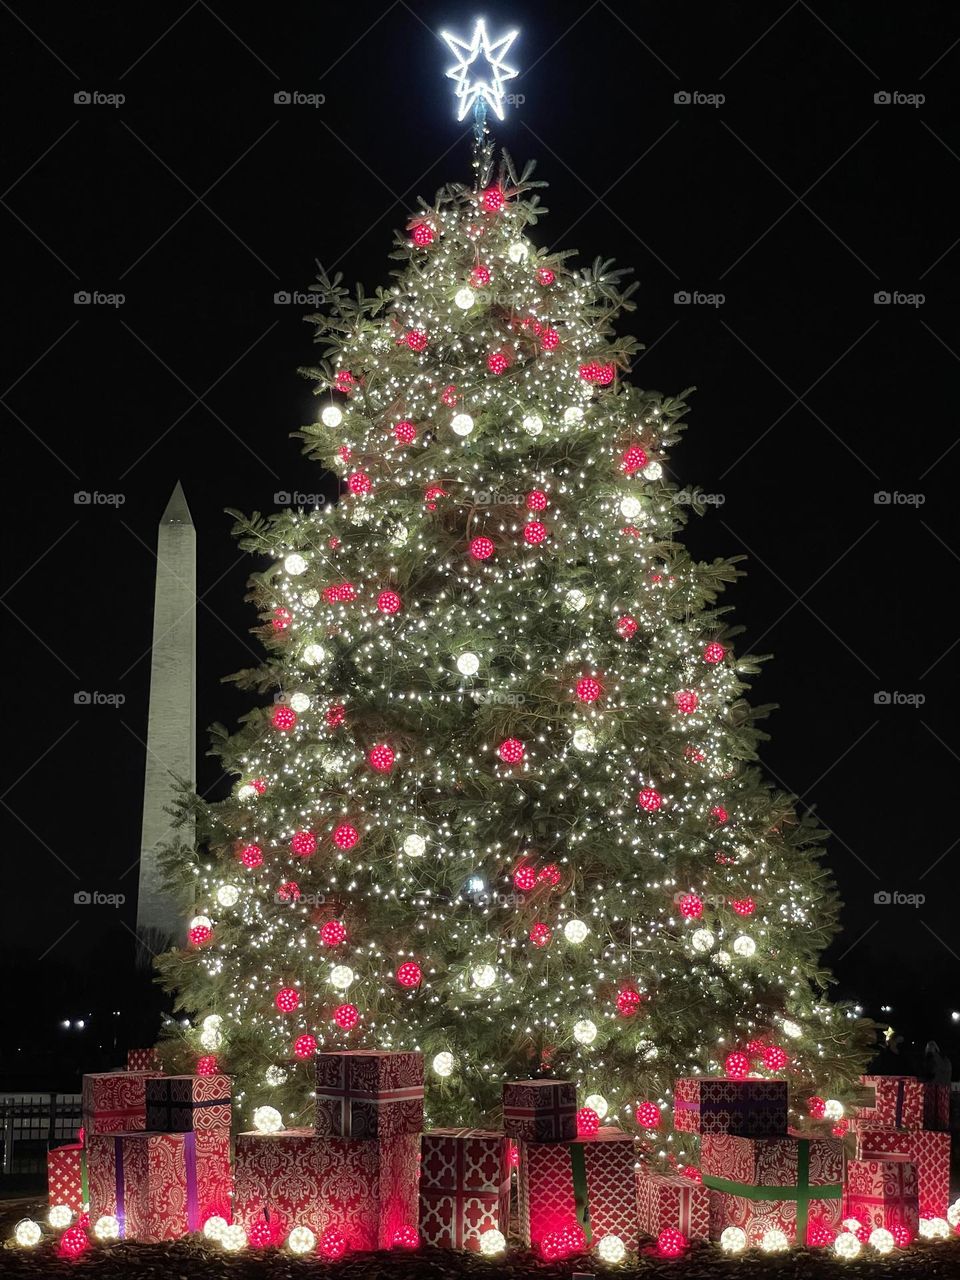 National Christmas tree, December 2021 in Washington DC